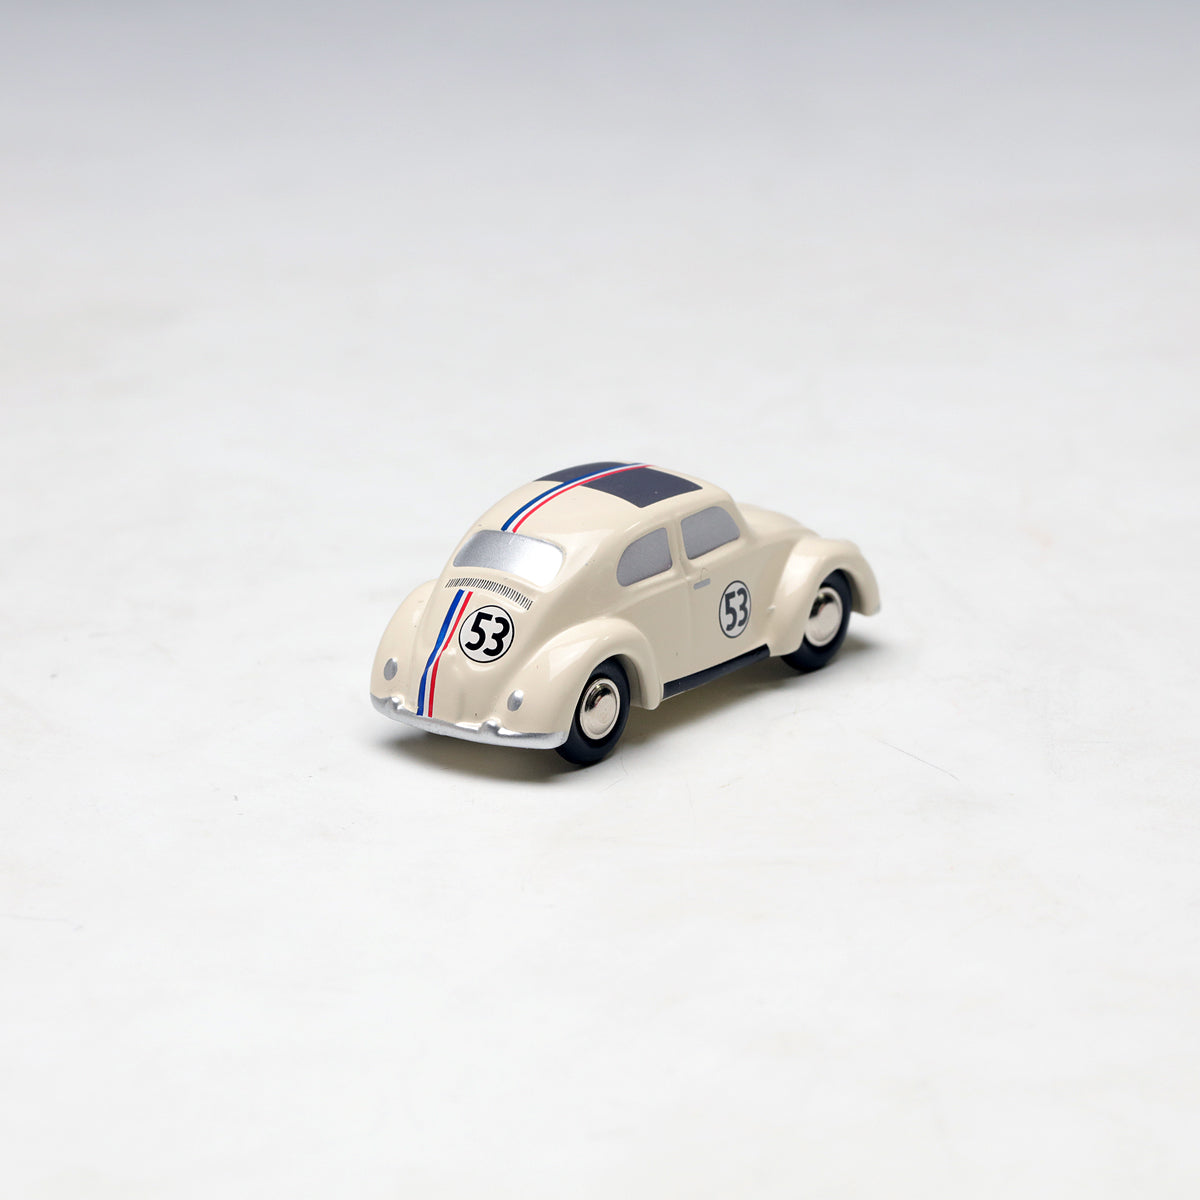 Schuco 1:90 Piccolo Volkswagen Beetle #53 Construction kit 450559000